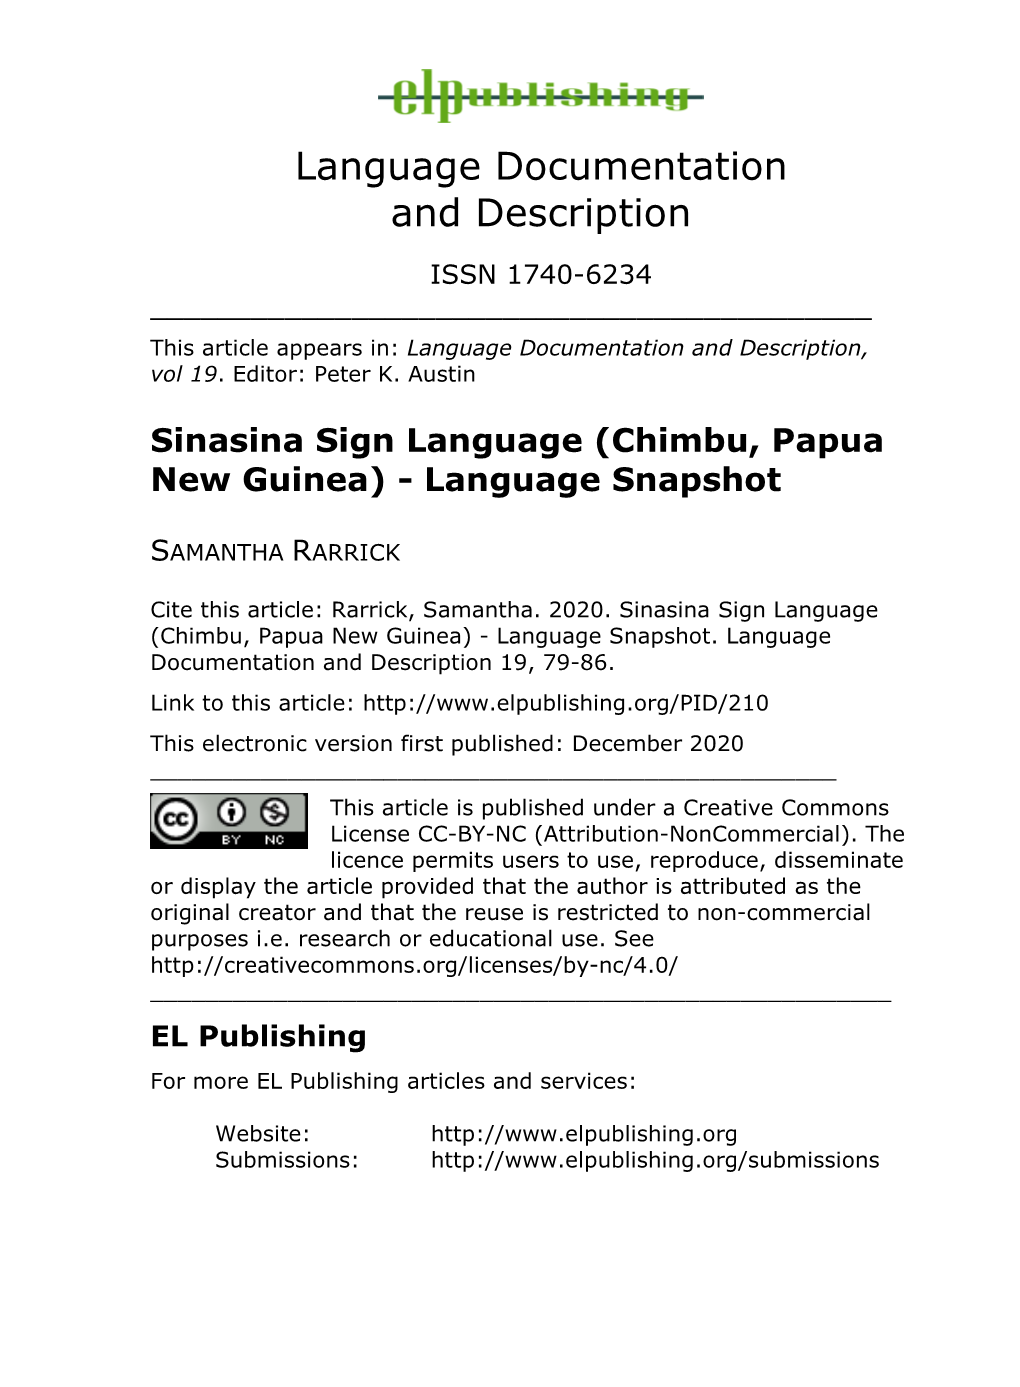 Sinasina Sign Language (Chimbu, Papua New Guinea) - Language Snapshot